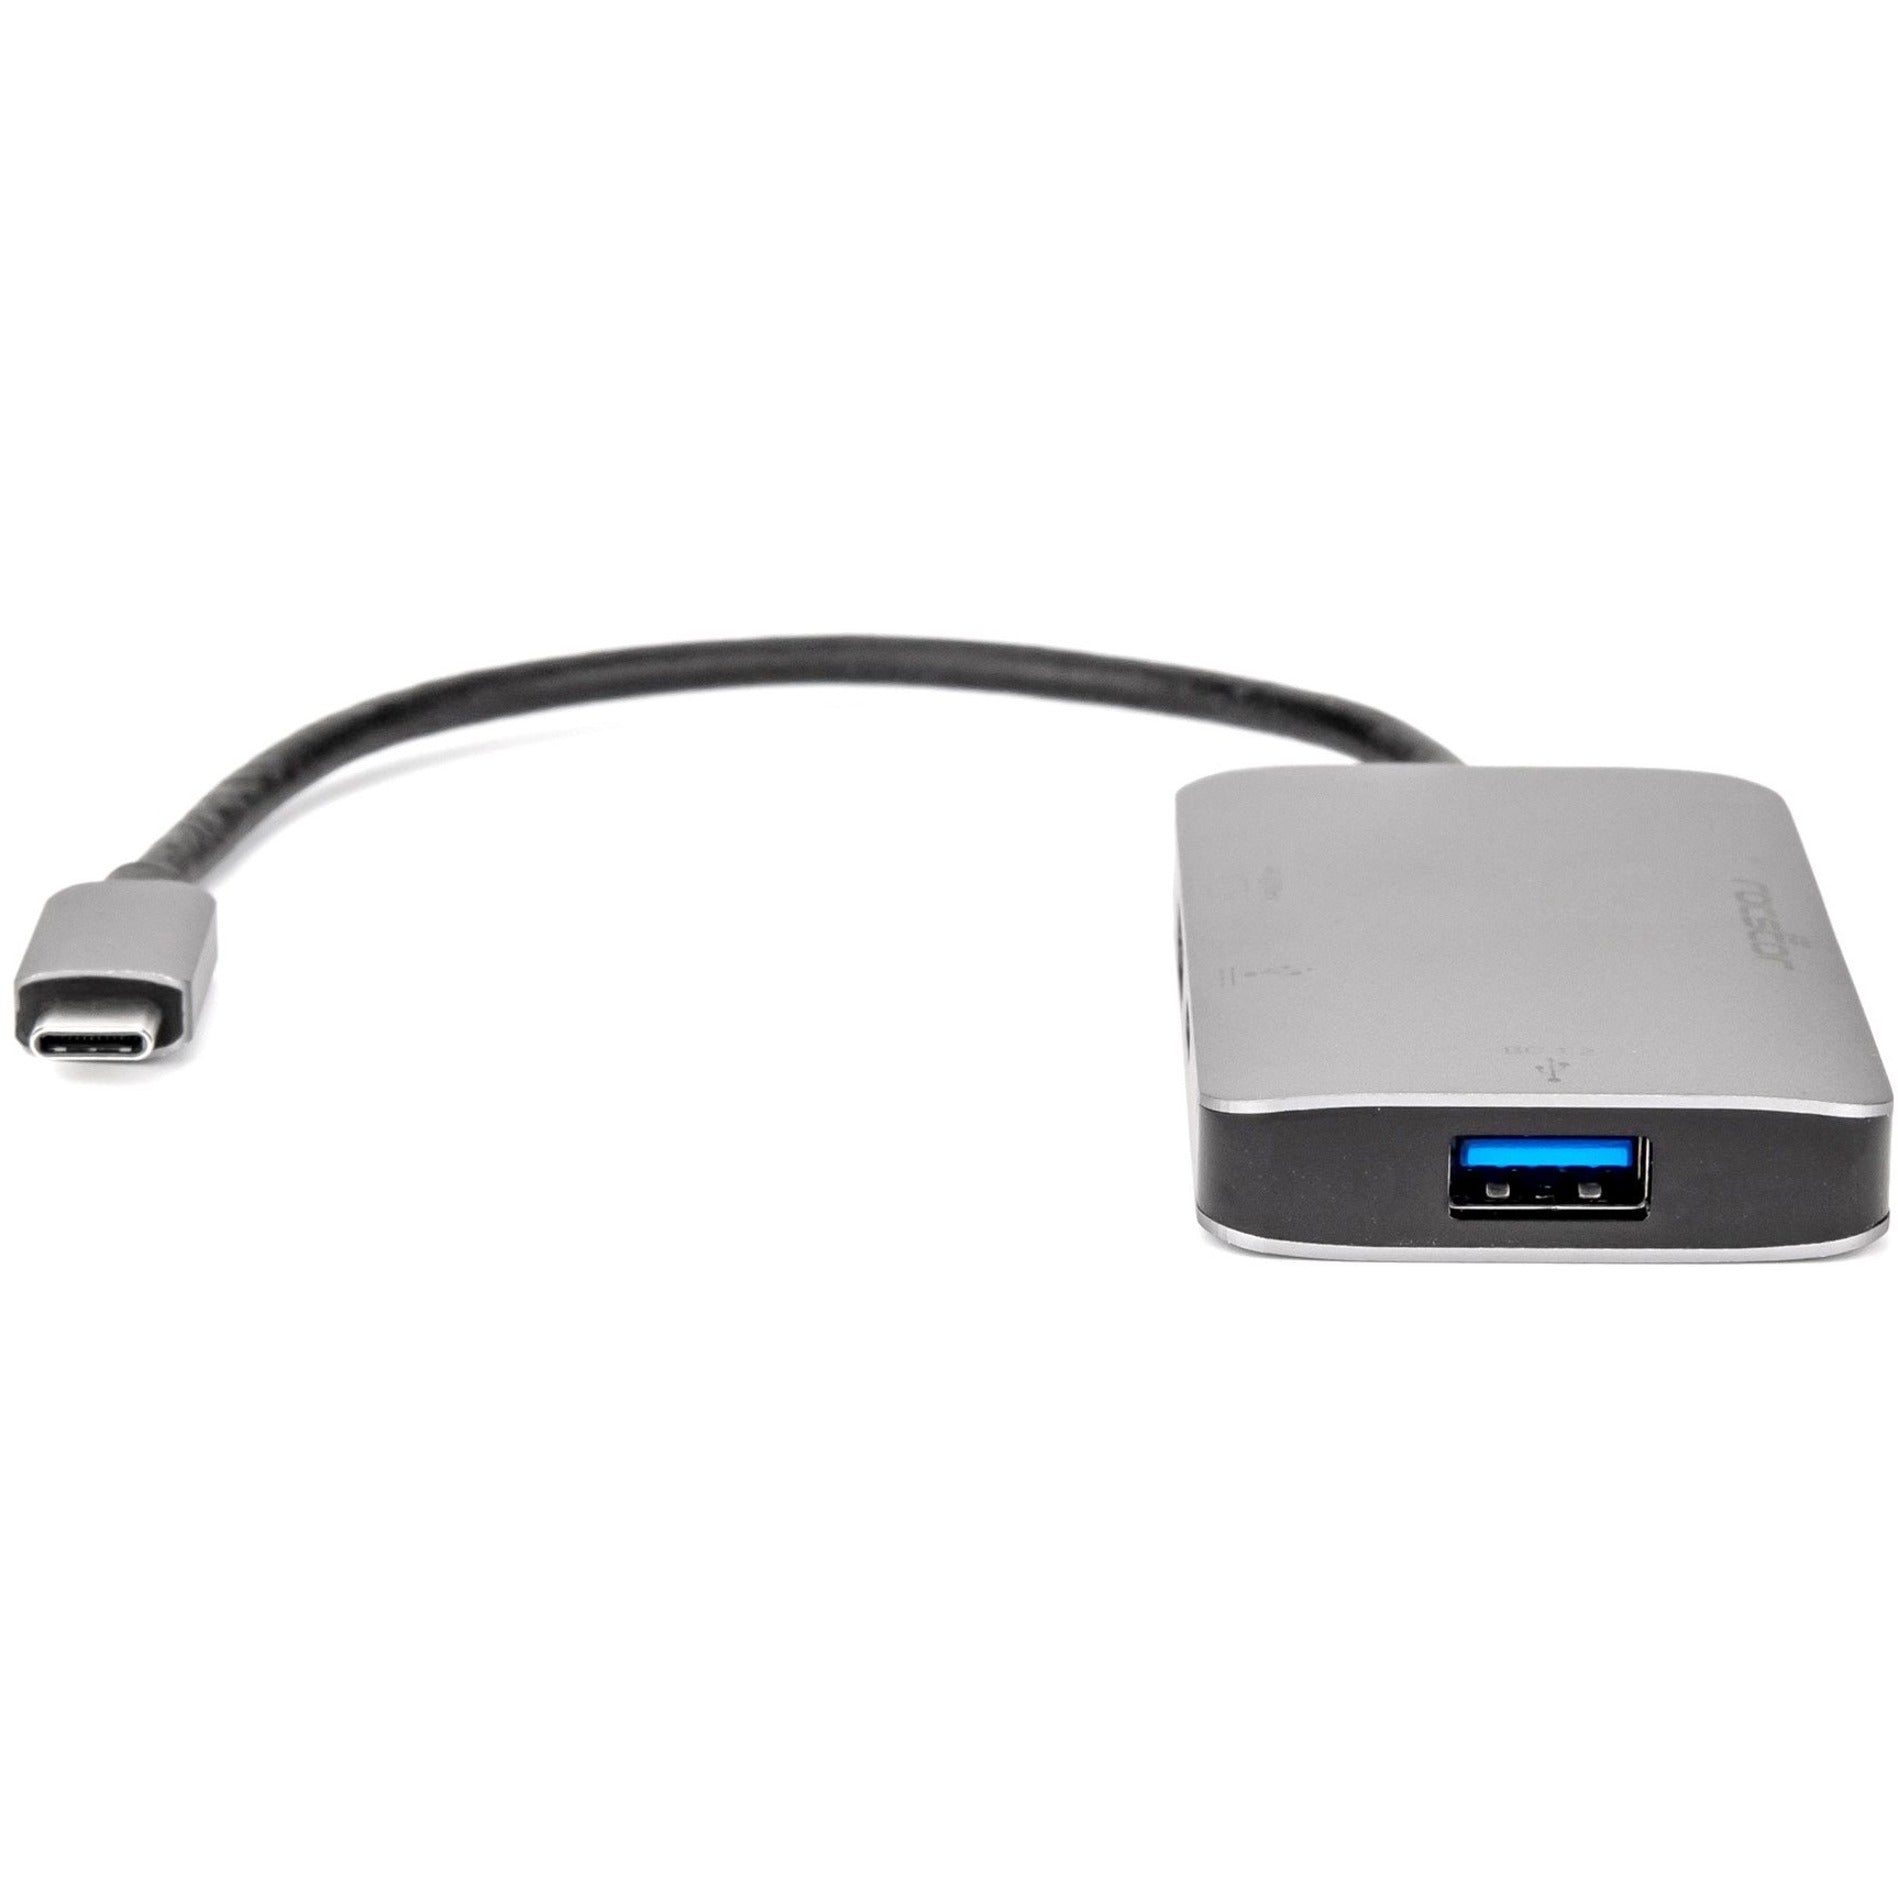 Rocstor Y10A176-S1 Adaptateur multiport USB-C vers HDMI - Convertisseur USB-C vers HDMI / USB-C (3.1) / USB 3.0 Argent